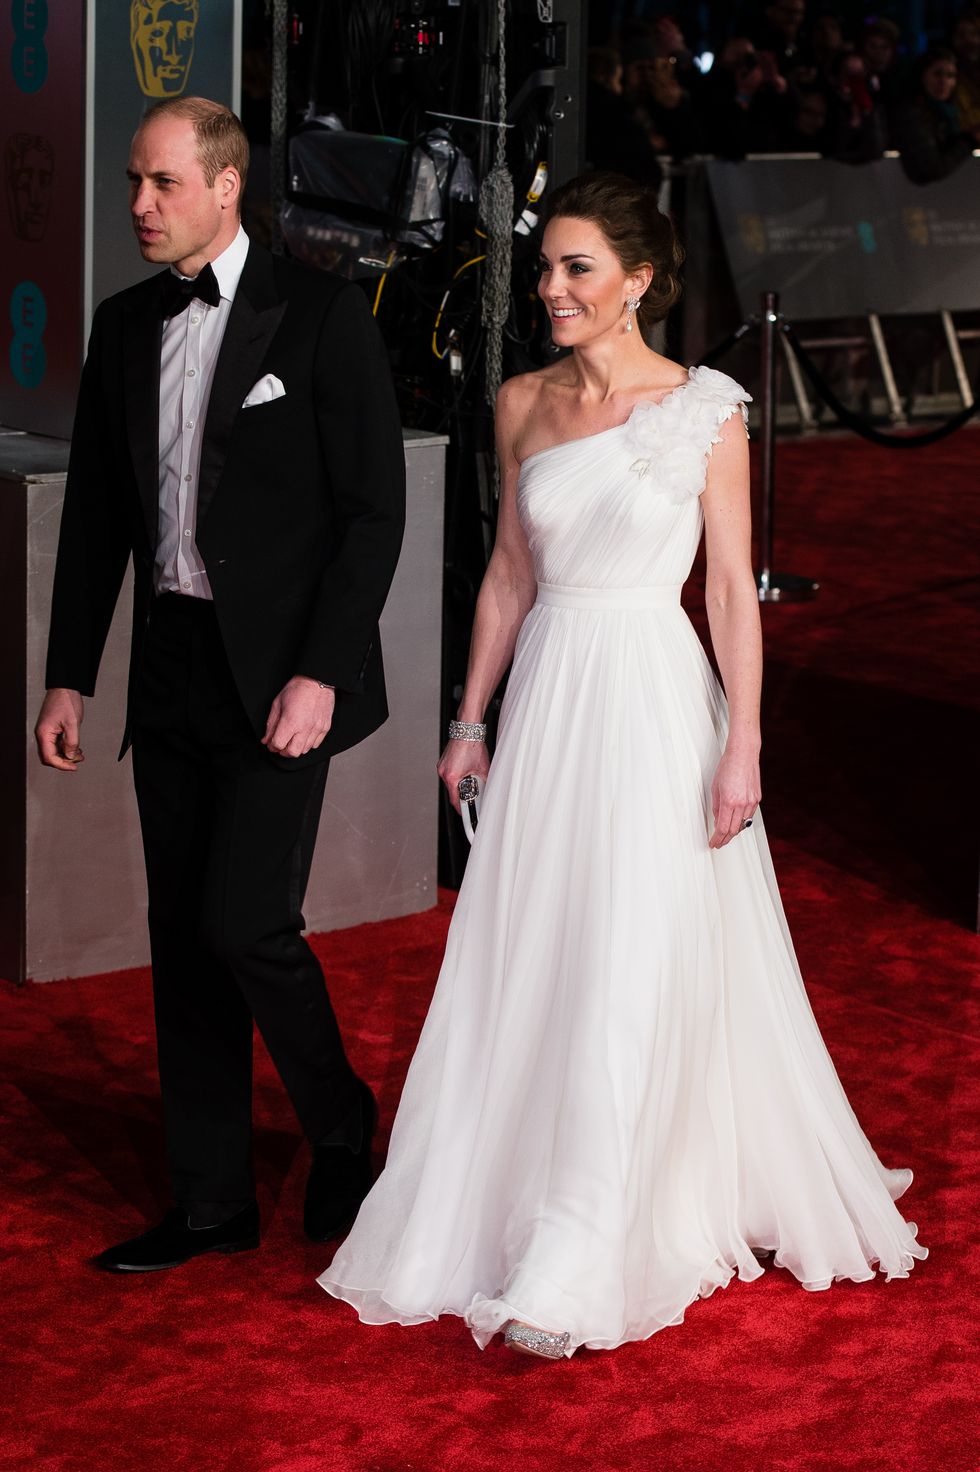 BAFTAs: Kate Middleton wears a white one-shoulder dress